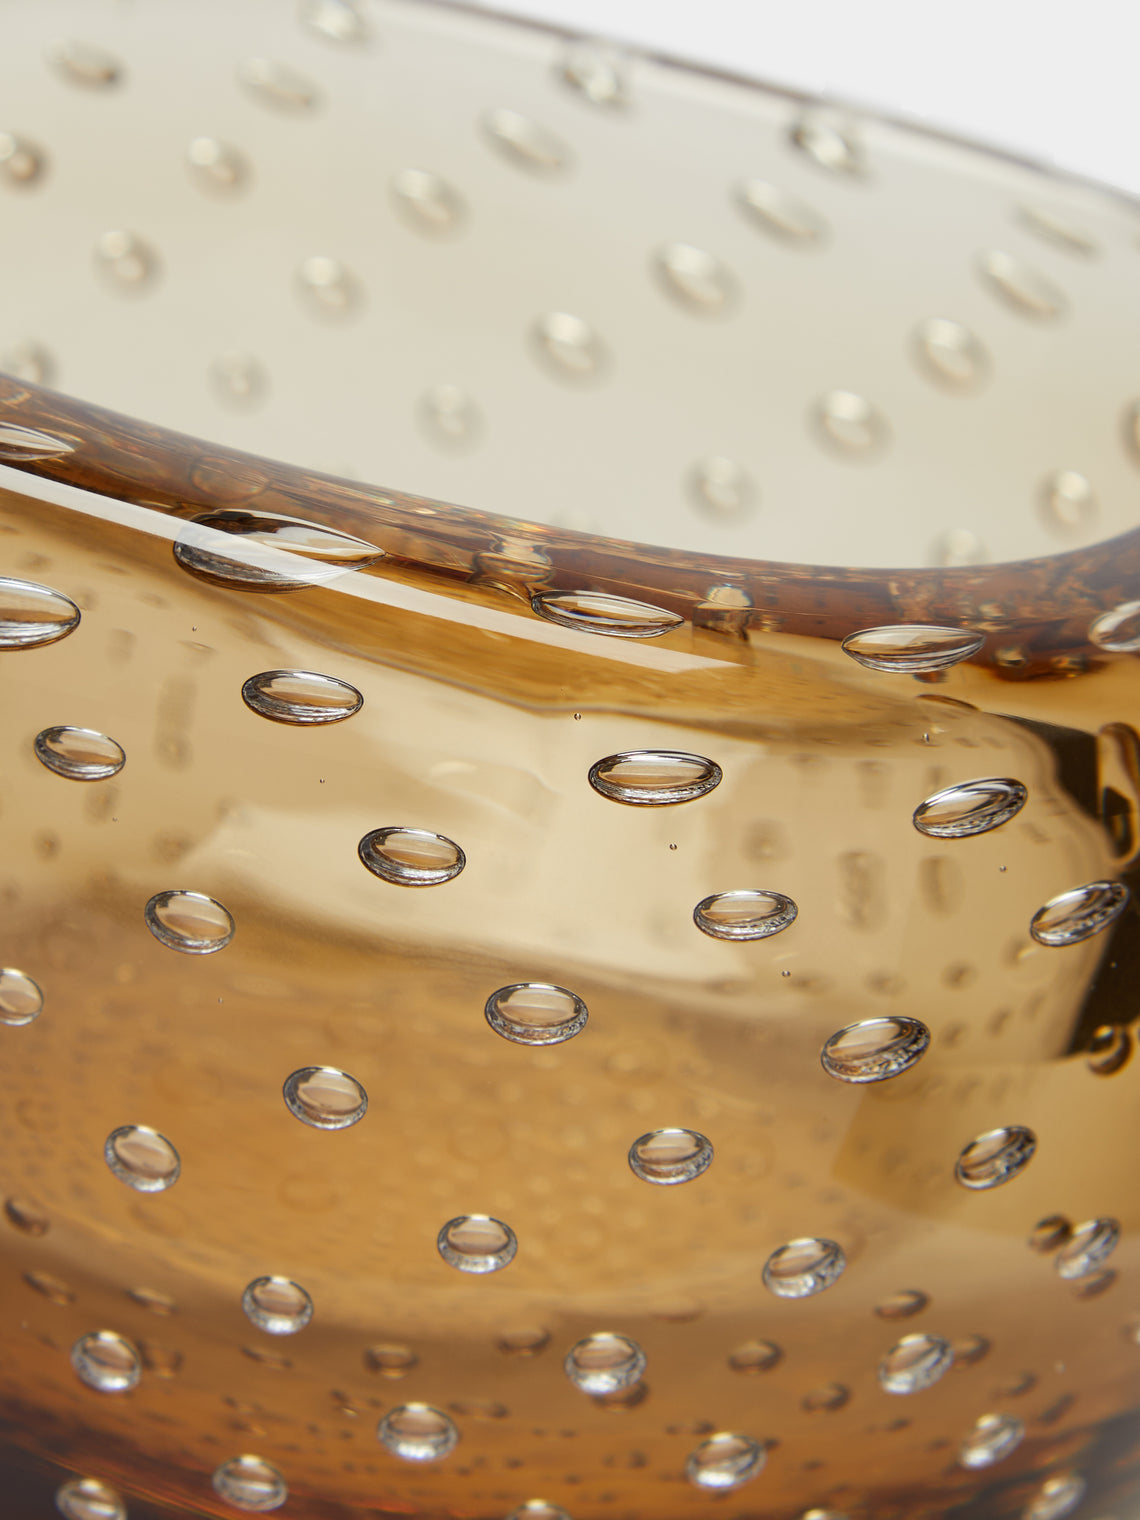 Yali Glass - Vegas Quadrato Hand-Blown Murano Glass Bowl - Brown - ABASK